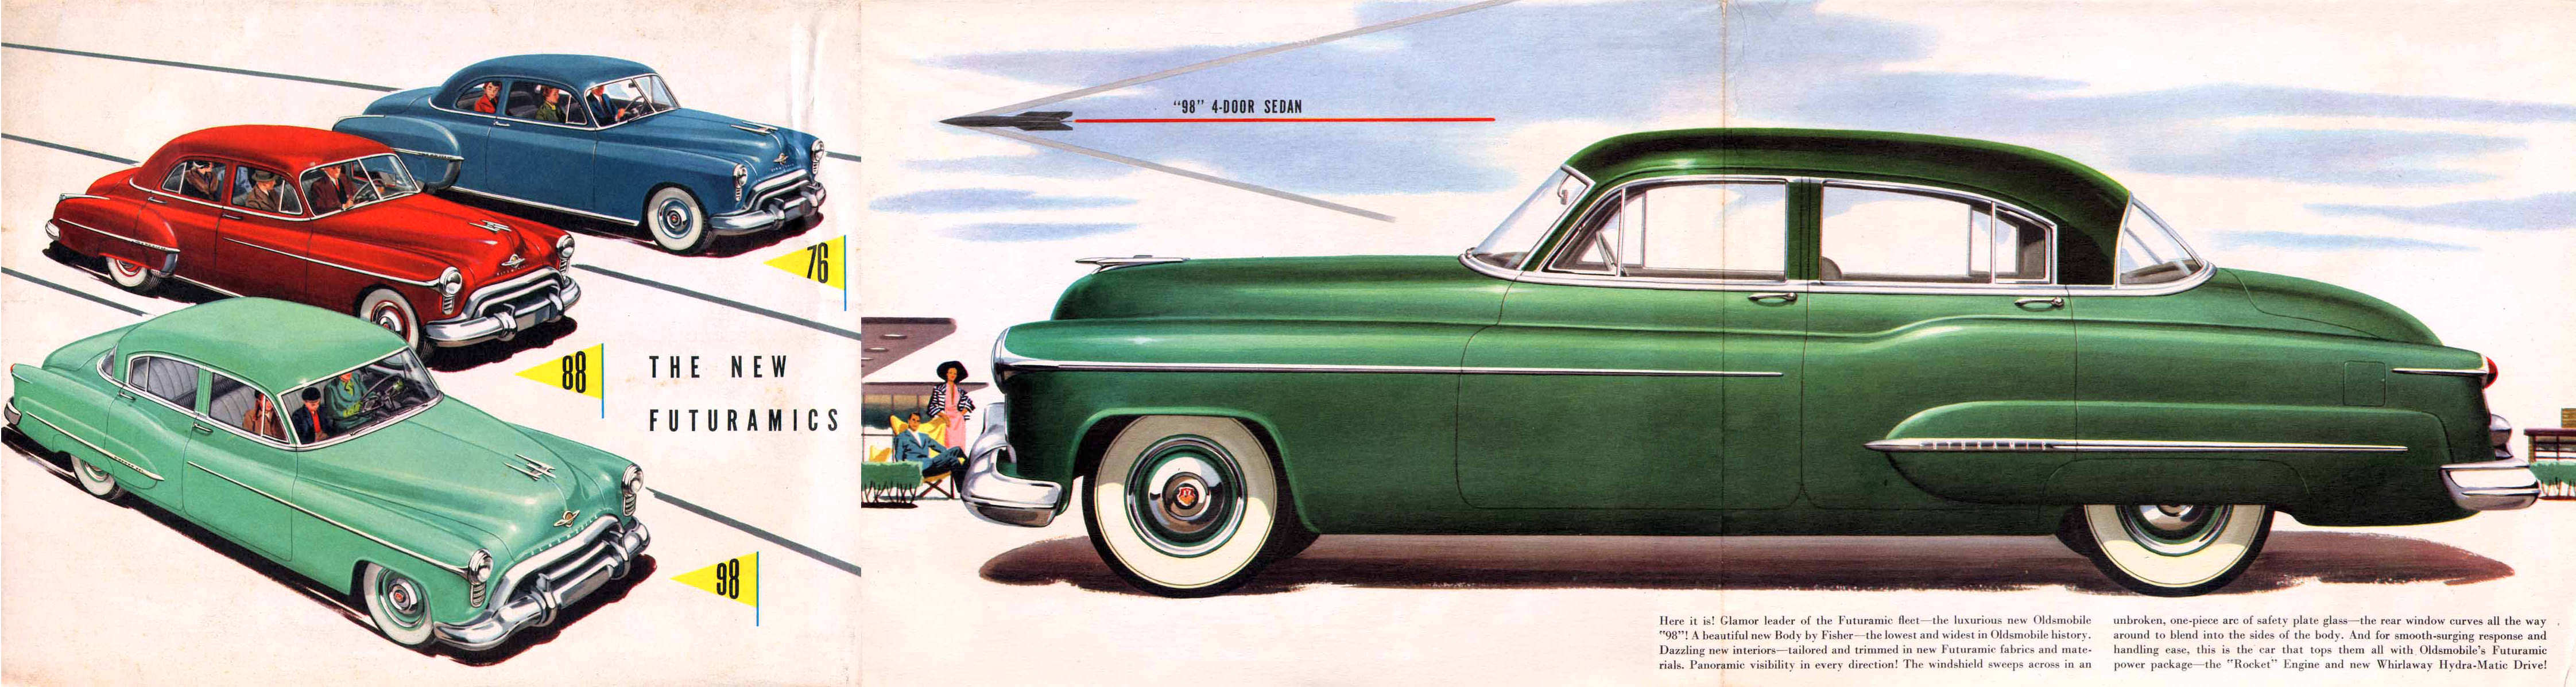 1950_Oldsmobile_Foldout-04-05-06